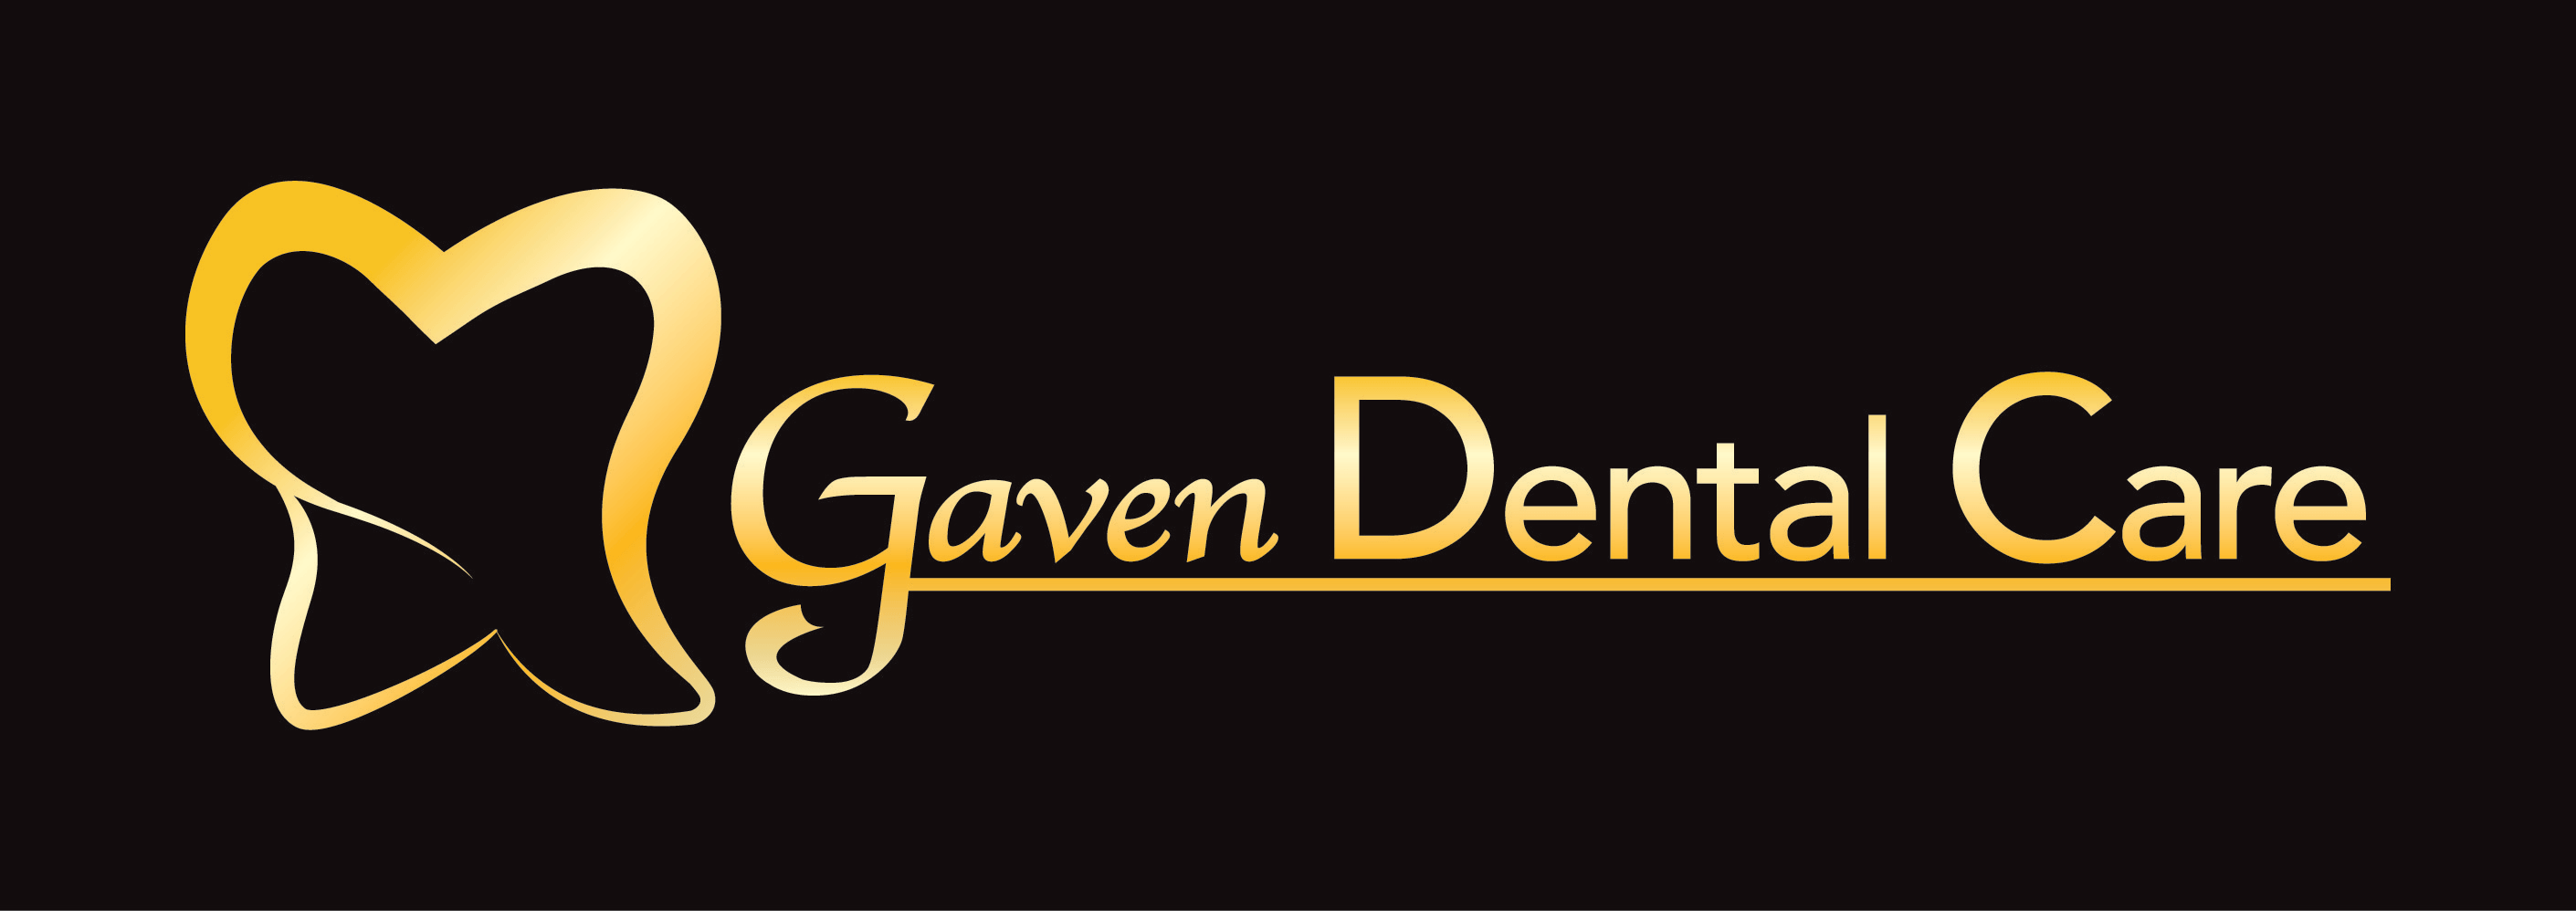 Gaven Dental Care - Logo